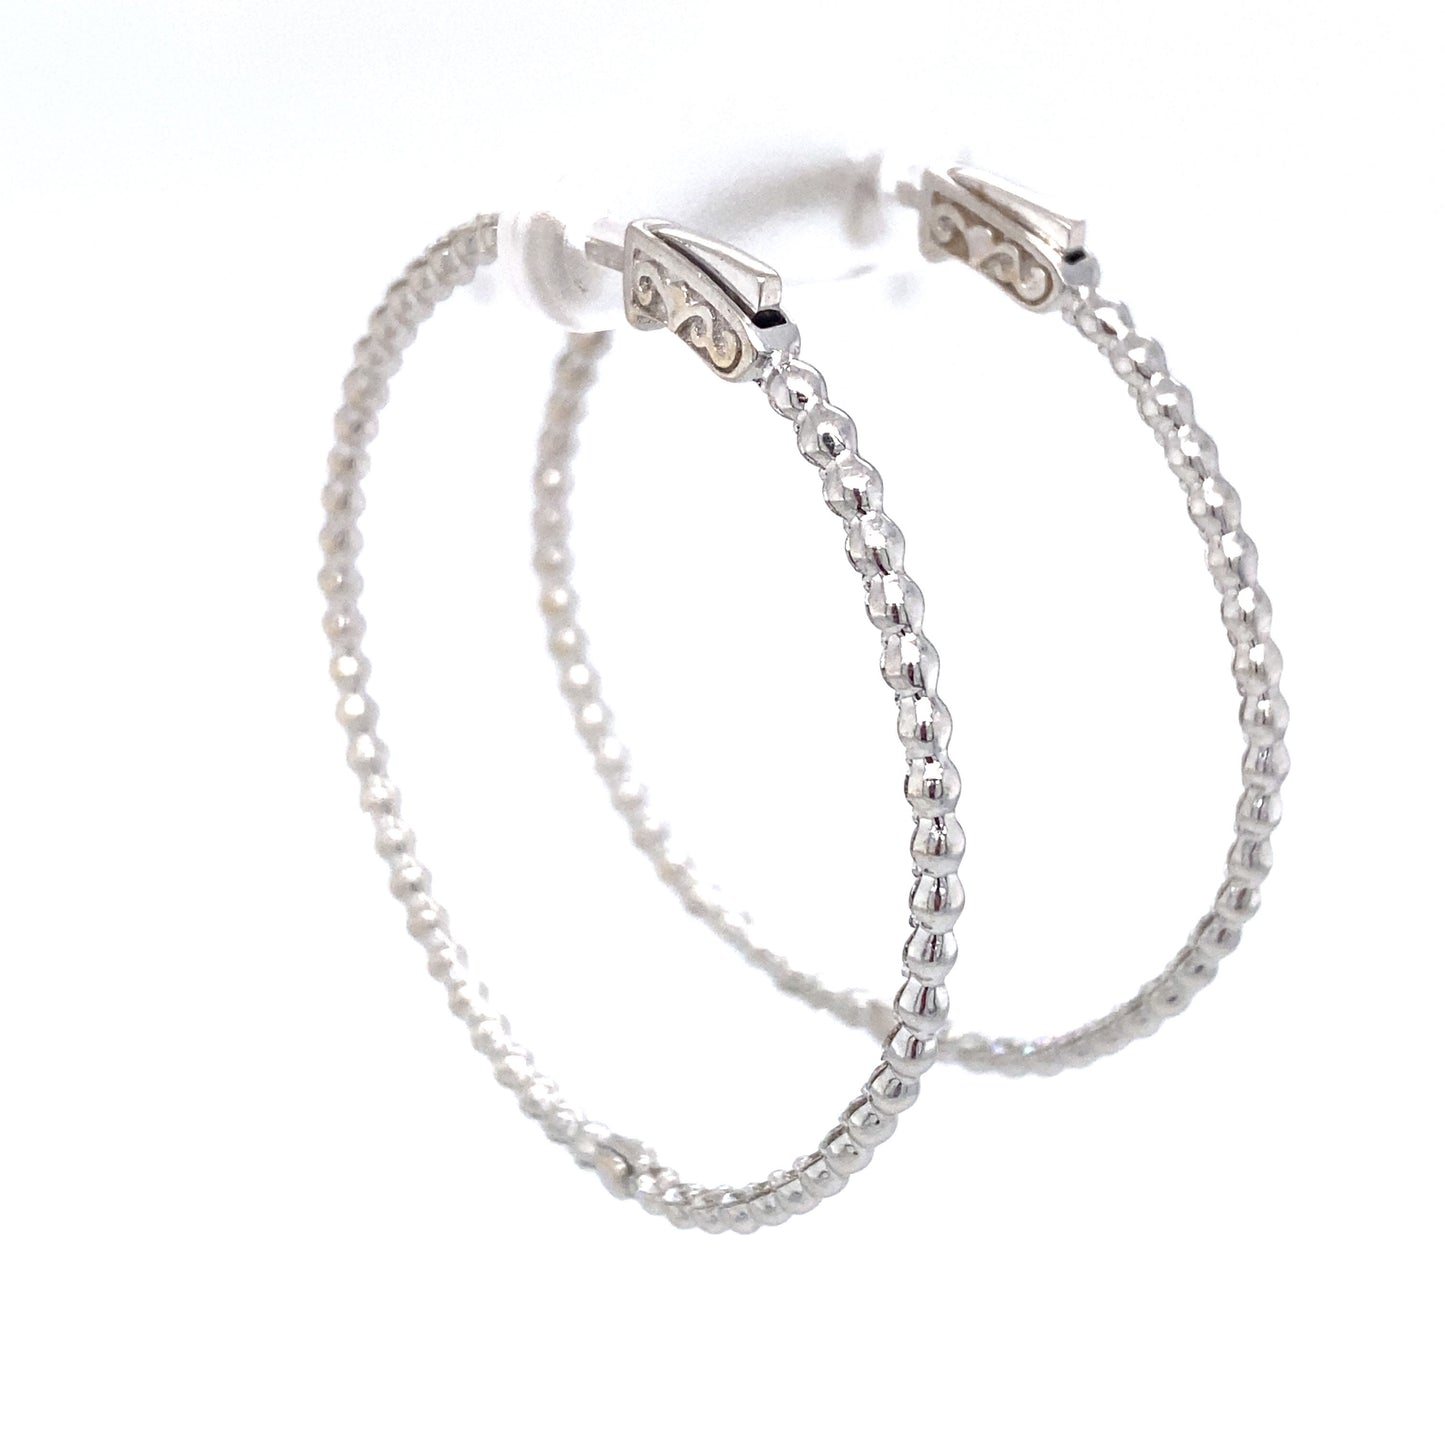 Circa 1990s 2.60 Carat Inside Out Diamond Hoop Earrings in 18K White Gold